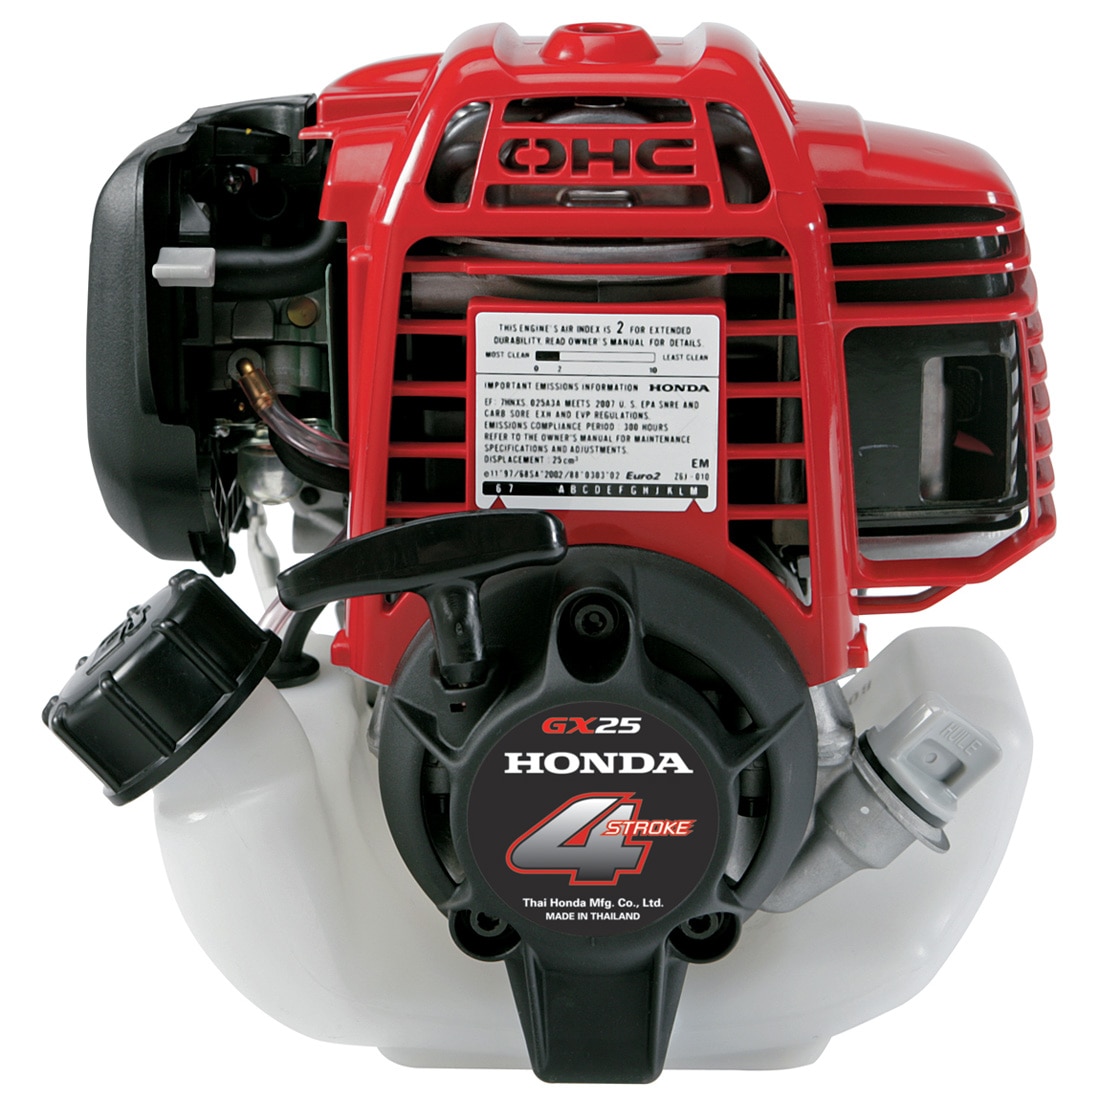 Honda Engines | Small Engine Models, Manuals, Parts, & Resources